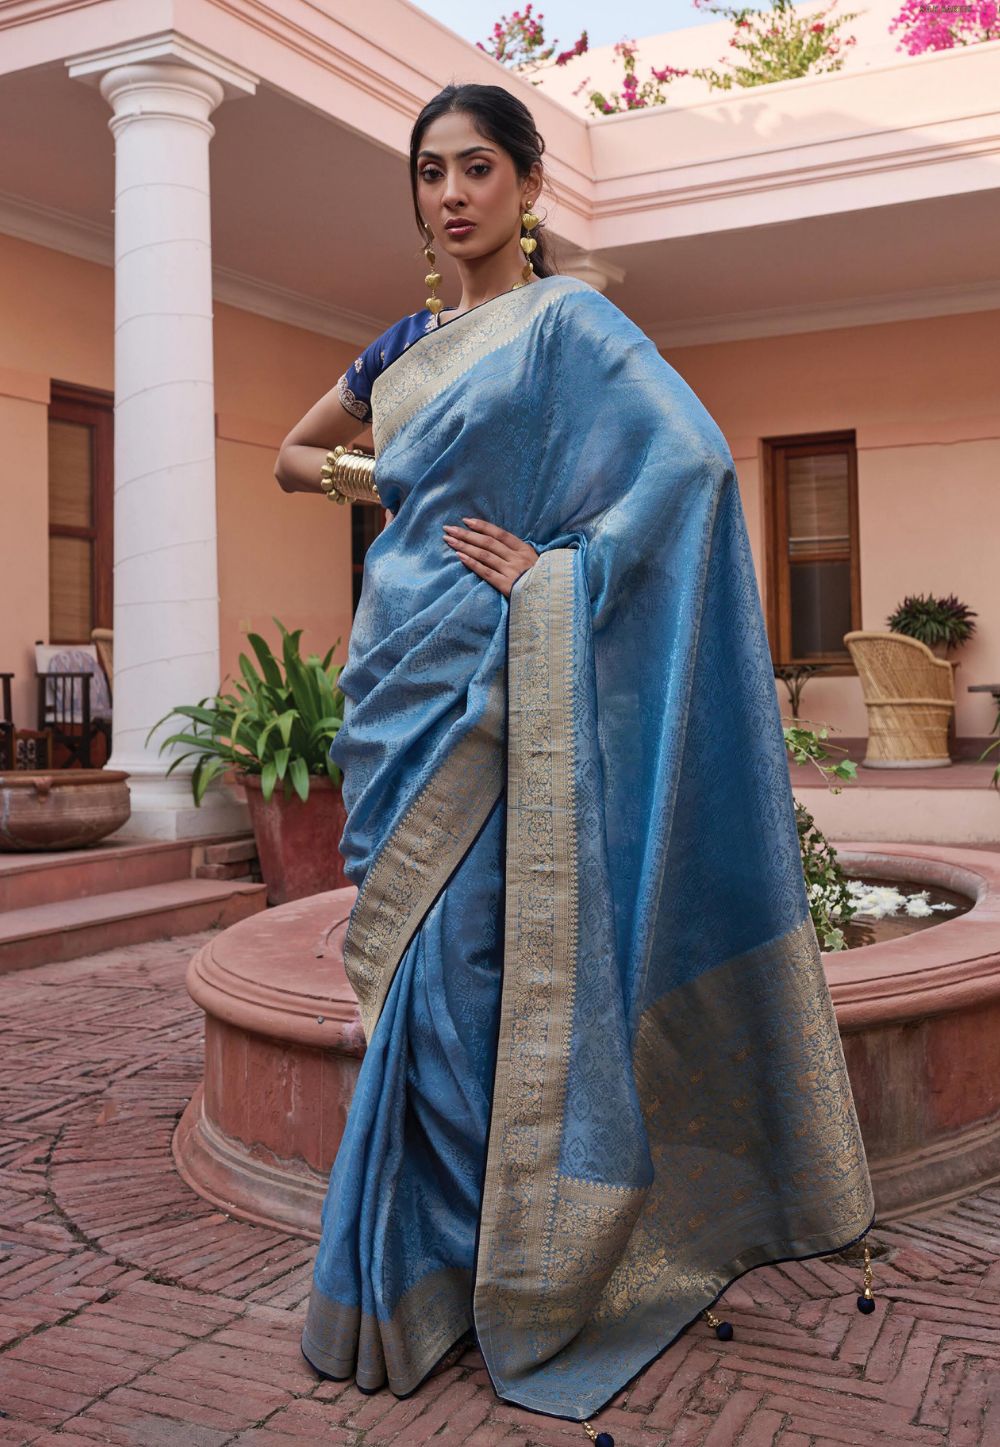 Woven Art Silk Saree in Blue